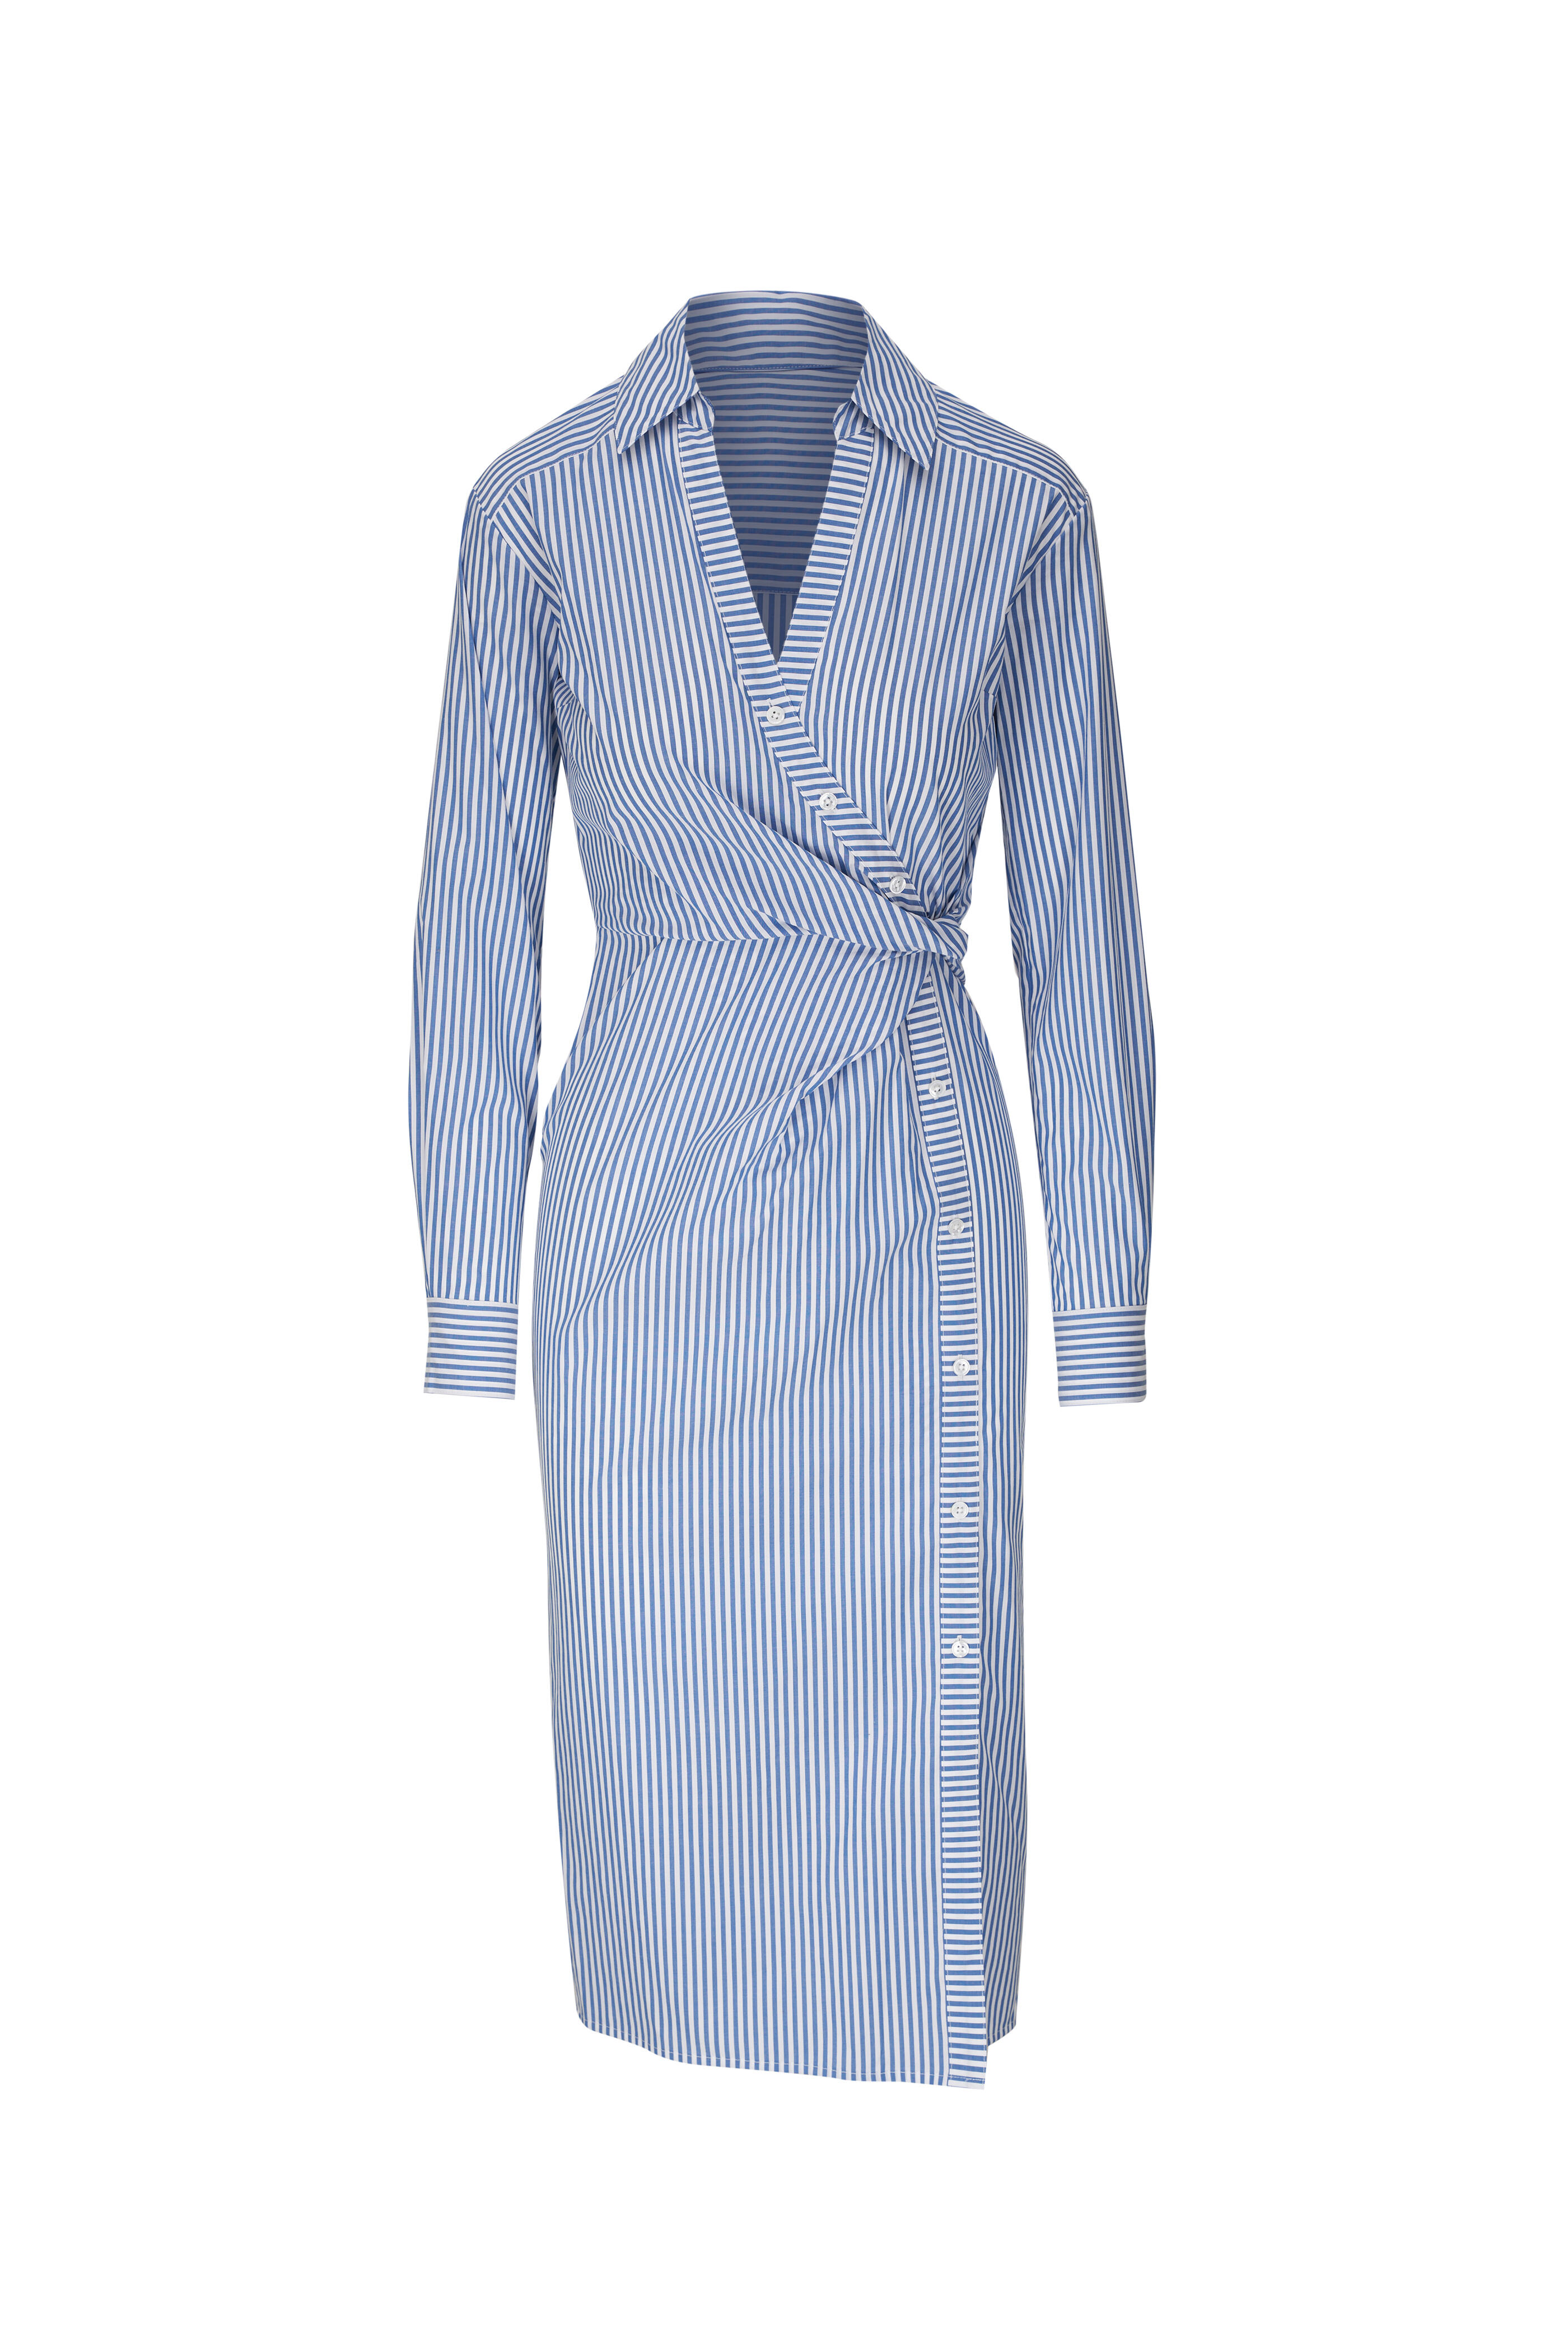 Veronica Beard - Wright Blue & White Stripe Cotton Dress